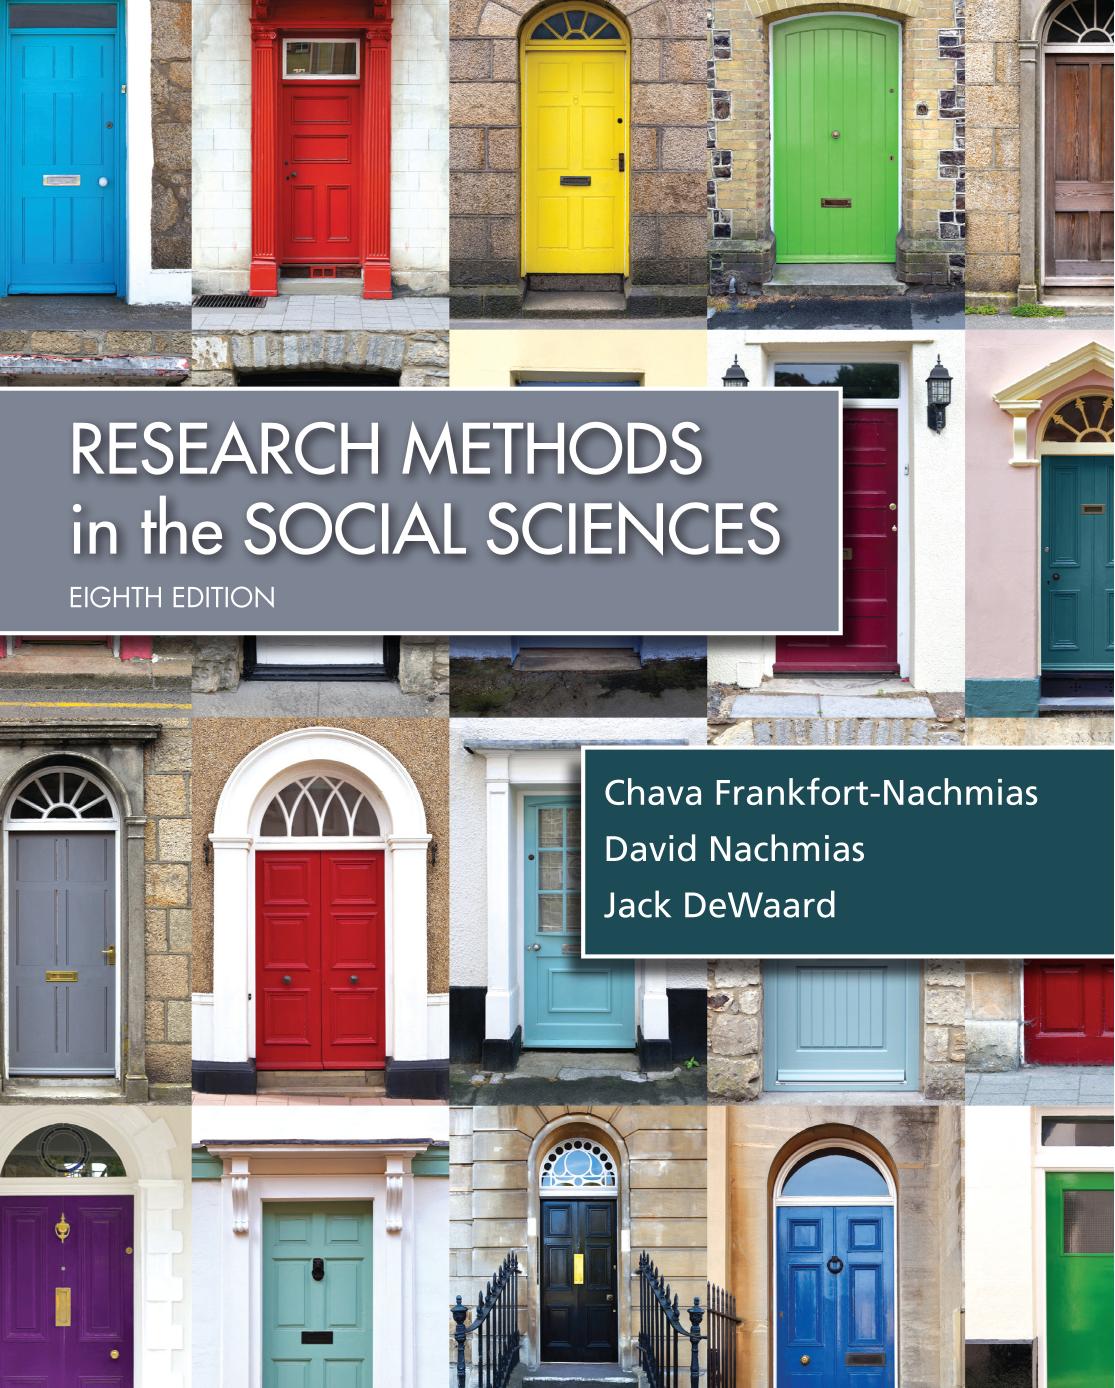 Research Methods in the Social Sciences by Chava Frankfort-Nachmias David Nachmias Jack DeWaard 2015